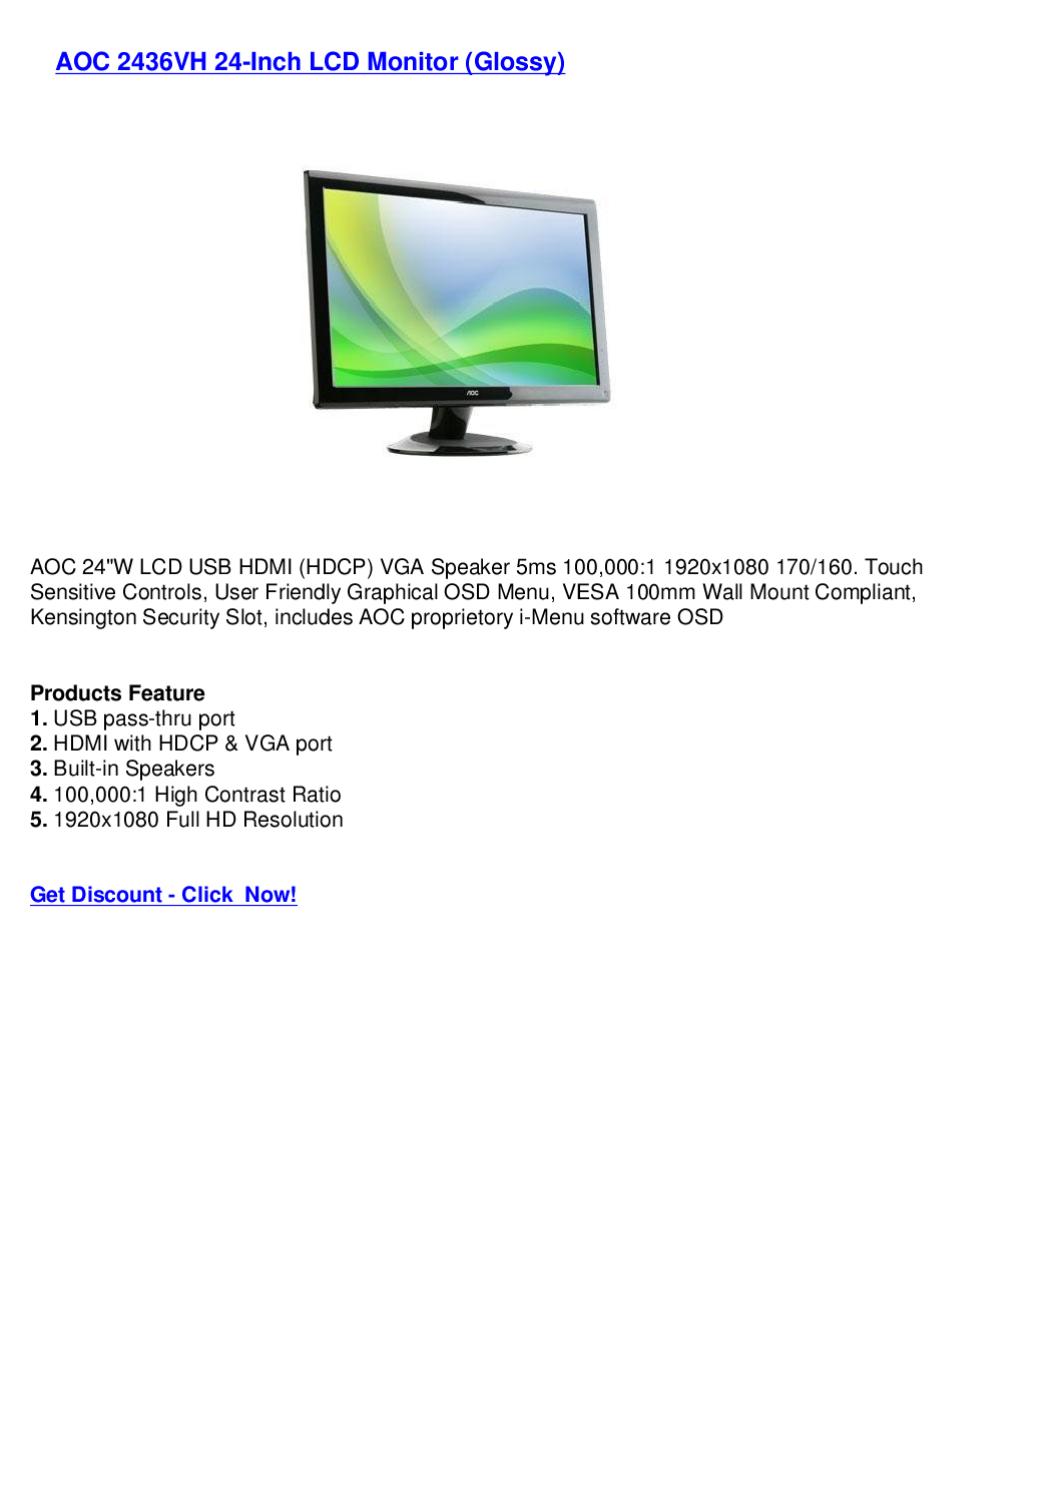 aoc monitor 215lm00040 driver for mac